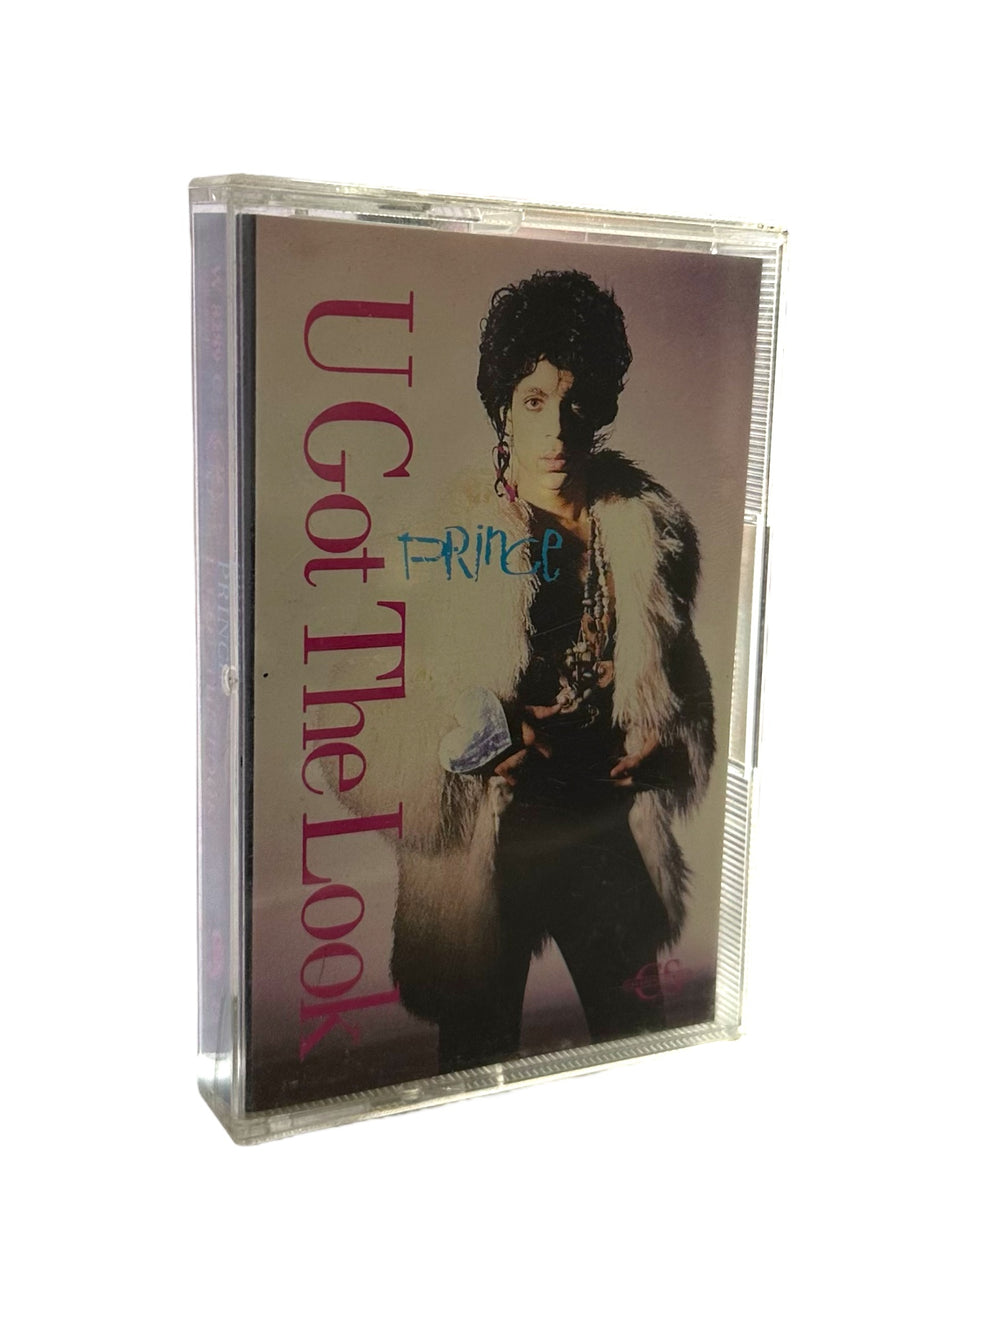 Prince – U Got The Look Cassette Single UK Preloved :1987